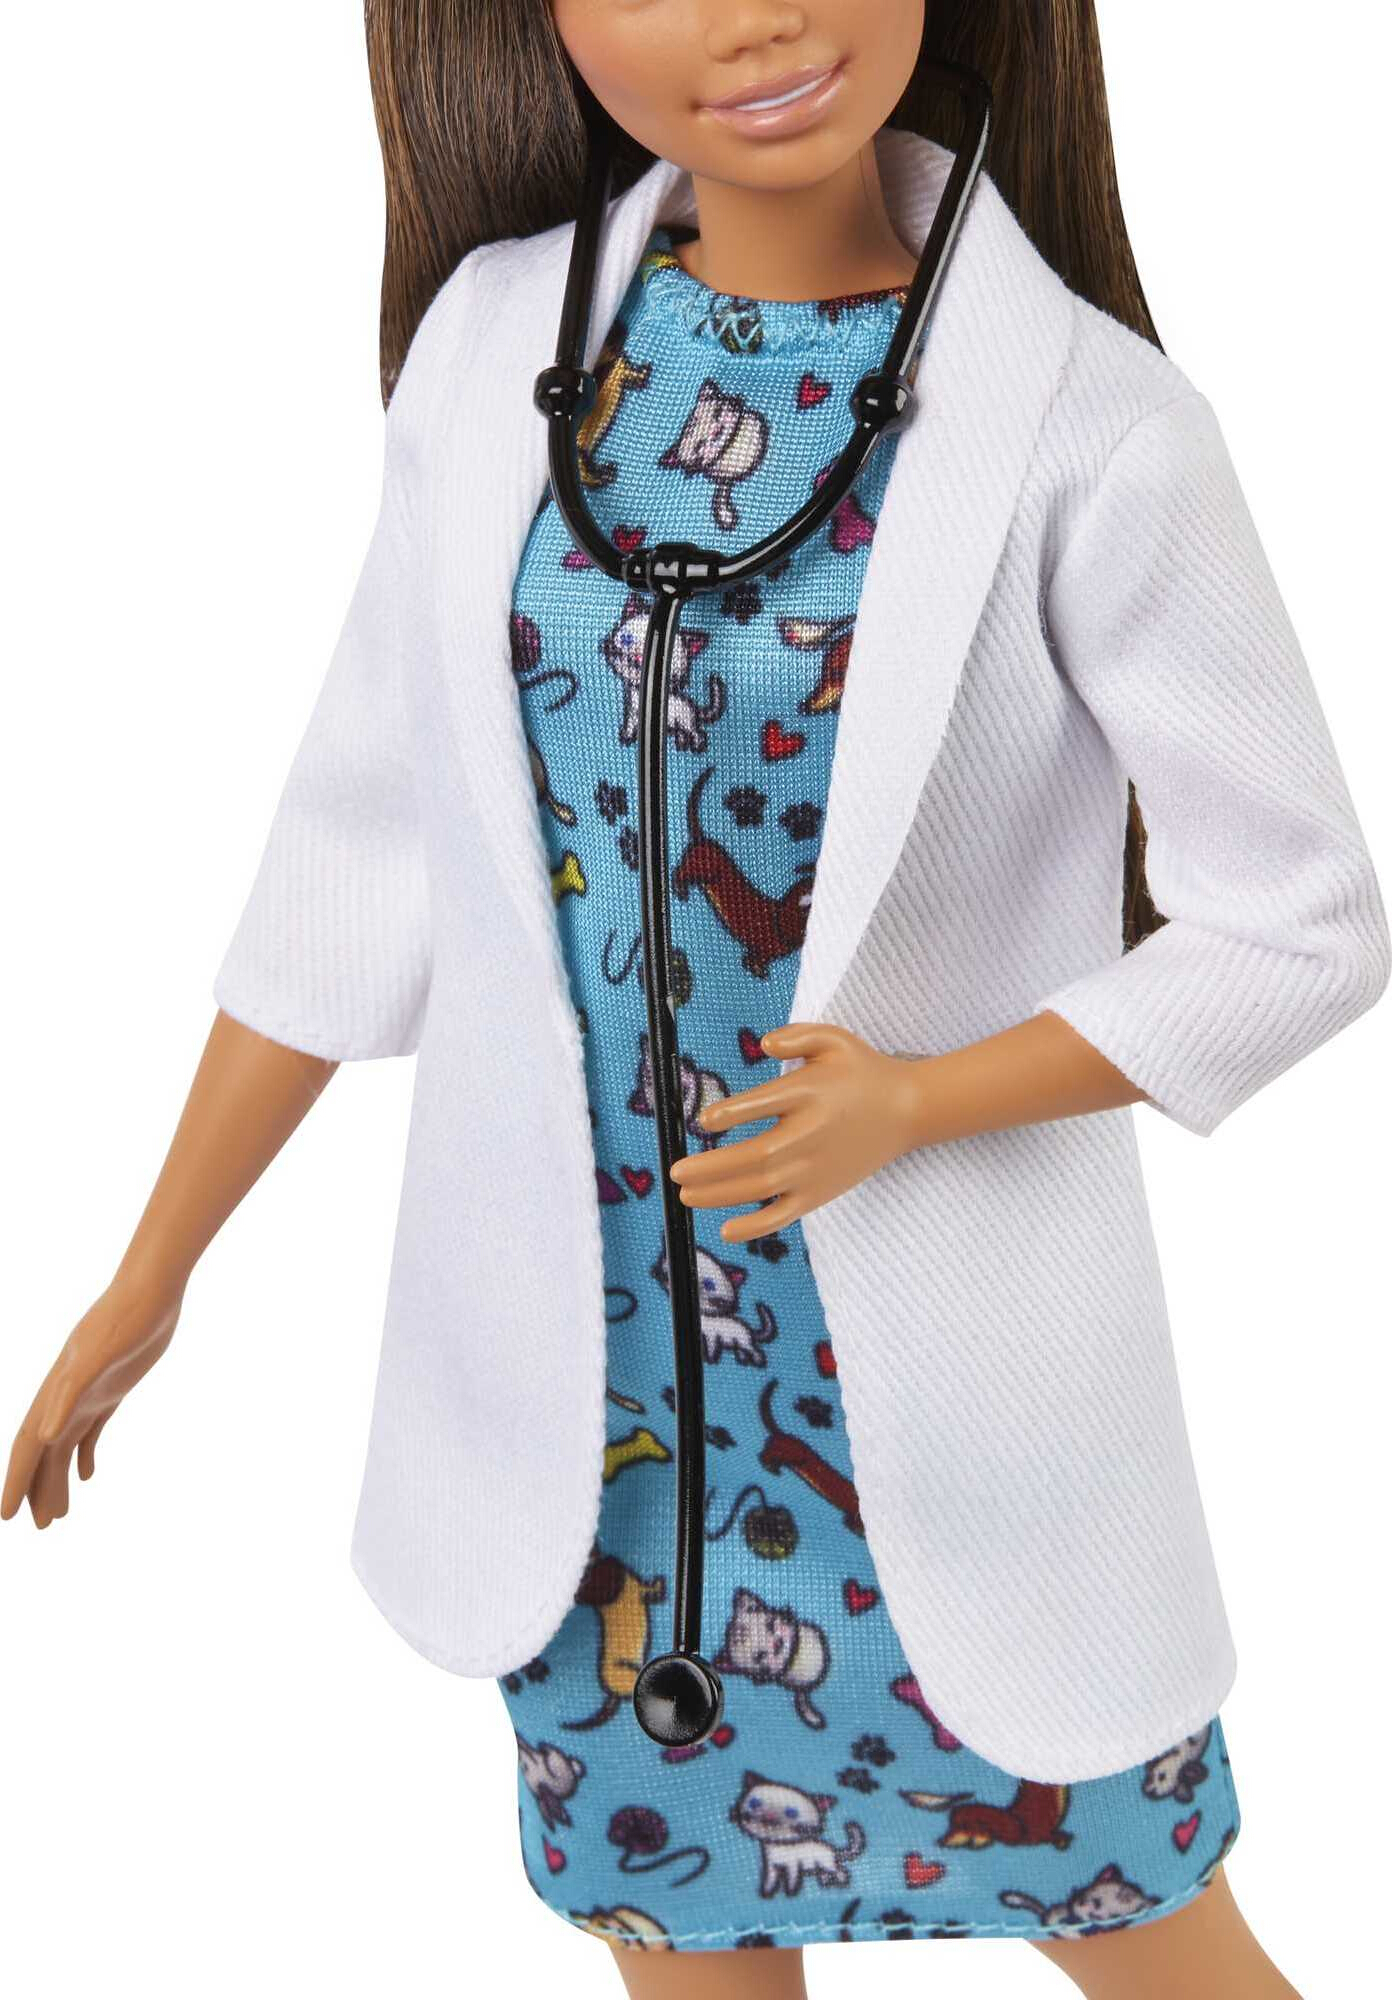 Barbie Pet Vet Fashion Doll Brunette with Medical Coat, Kitten Patient & Accessories - image 4 of 6